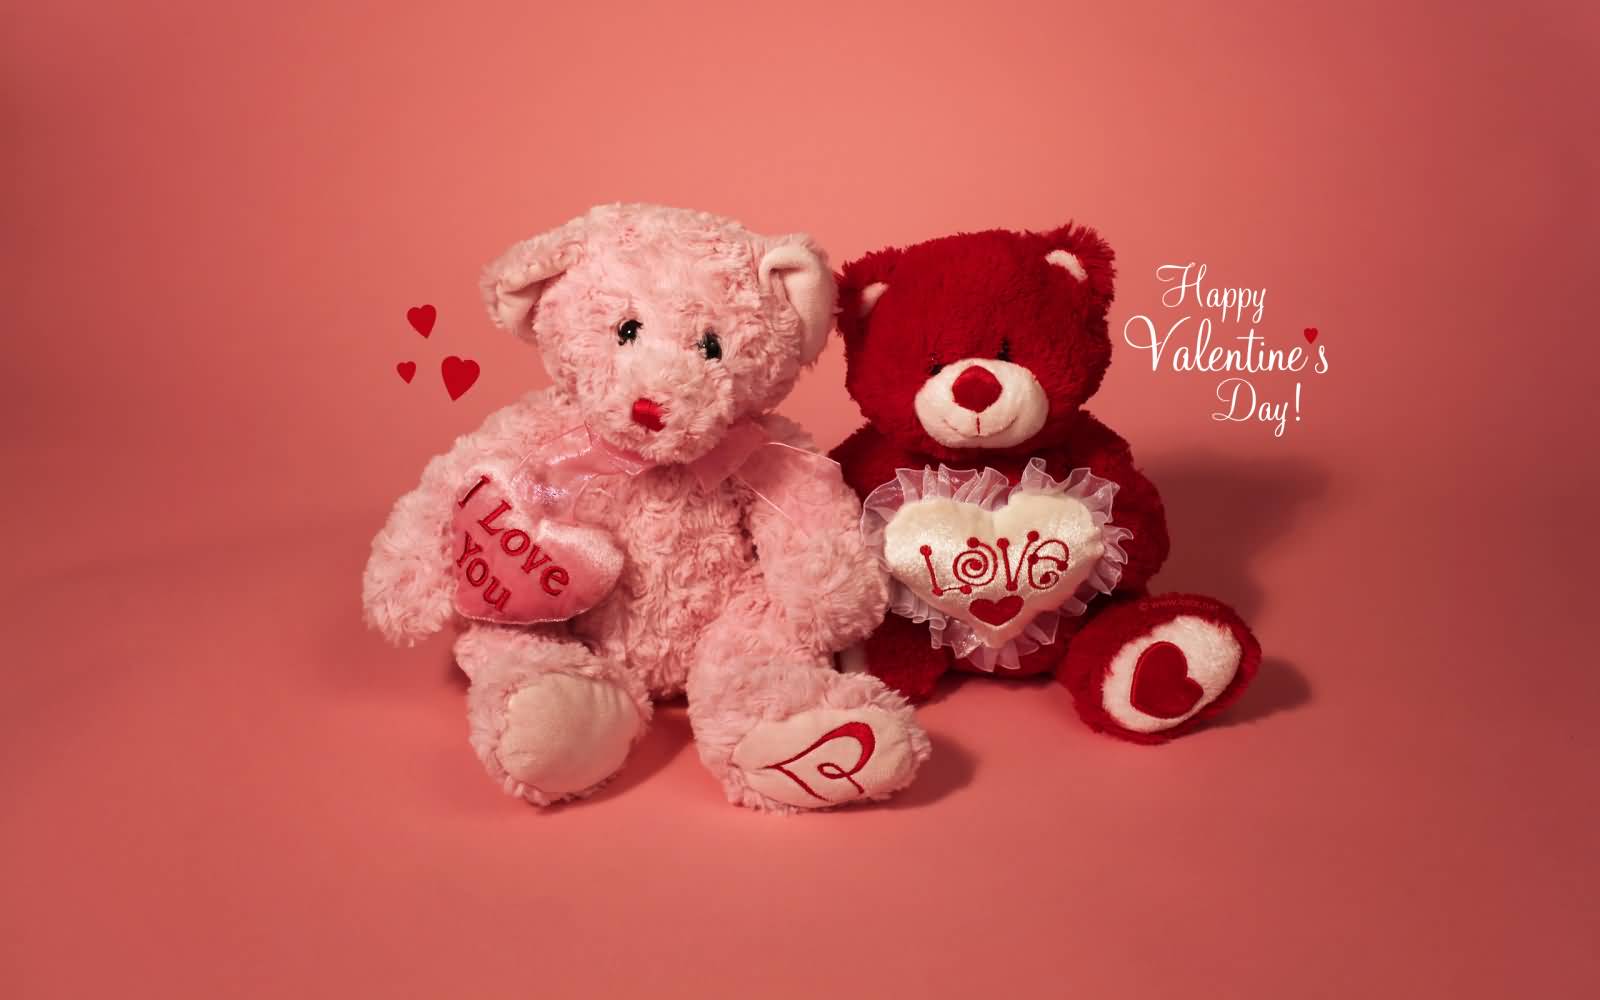 Happy Valentine's Day Two Teddy Bears HD Wallpaper